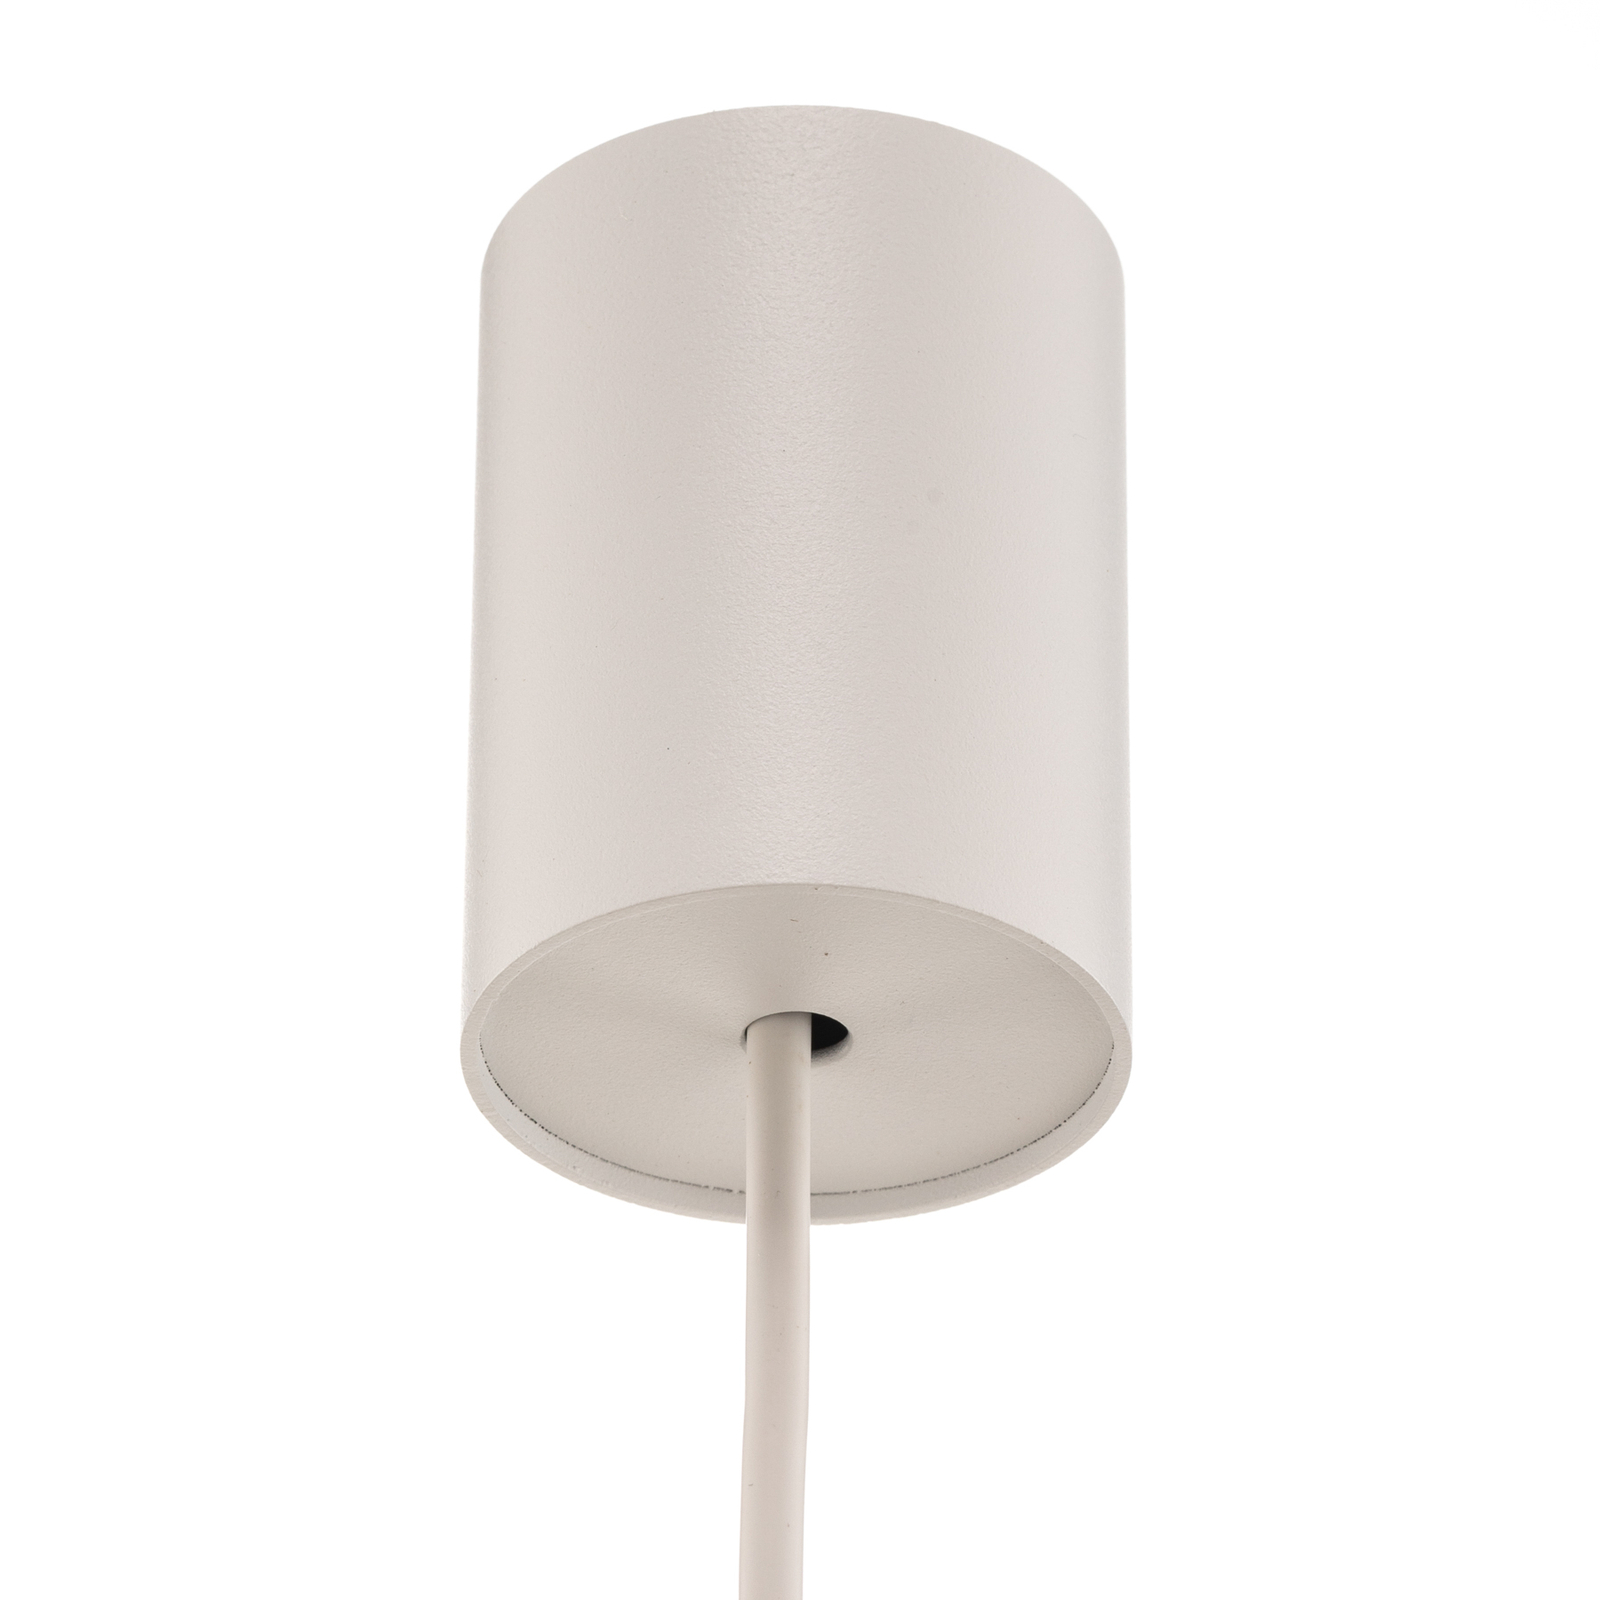 Turda pendant light, Ø 50 cm, white